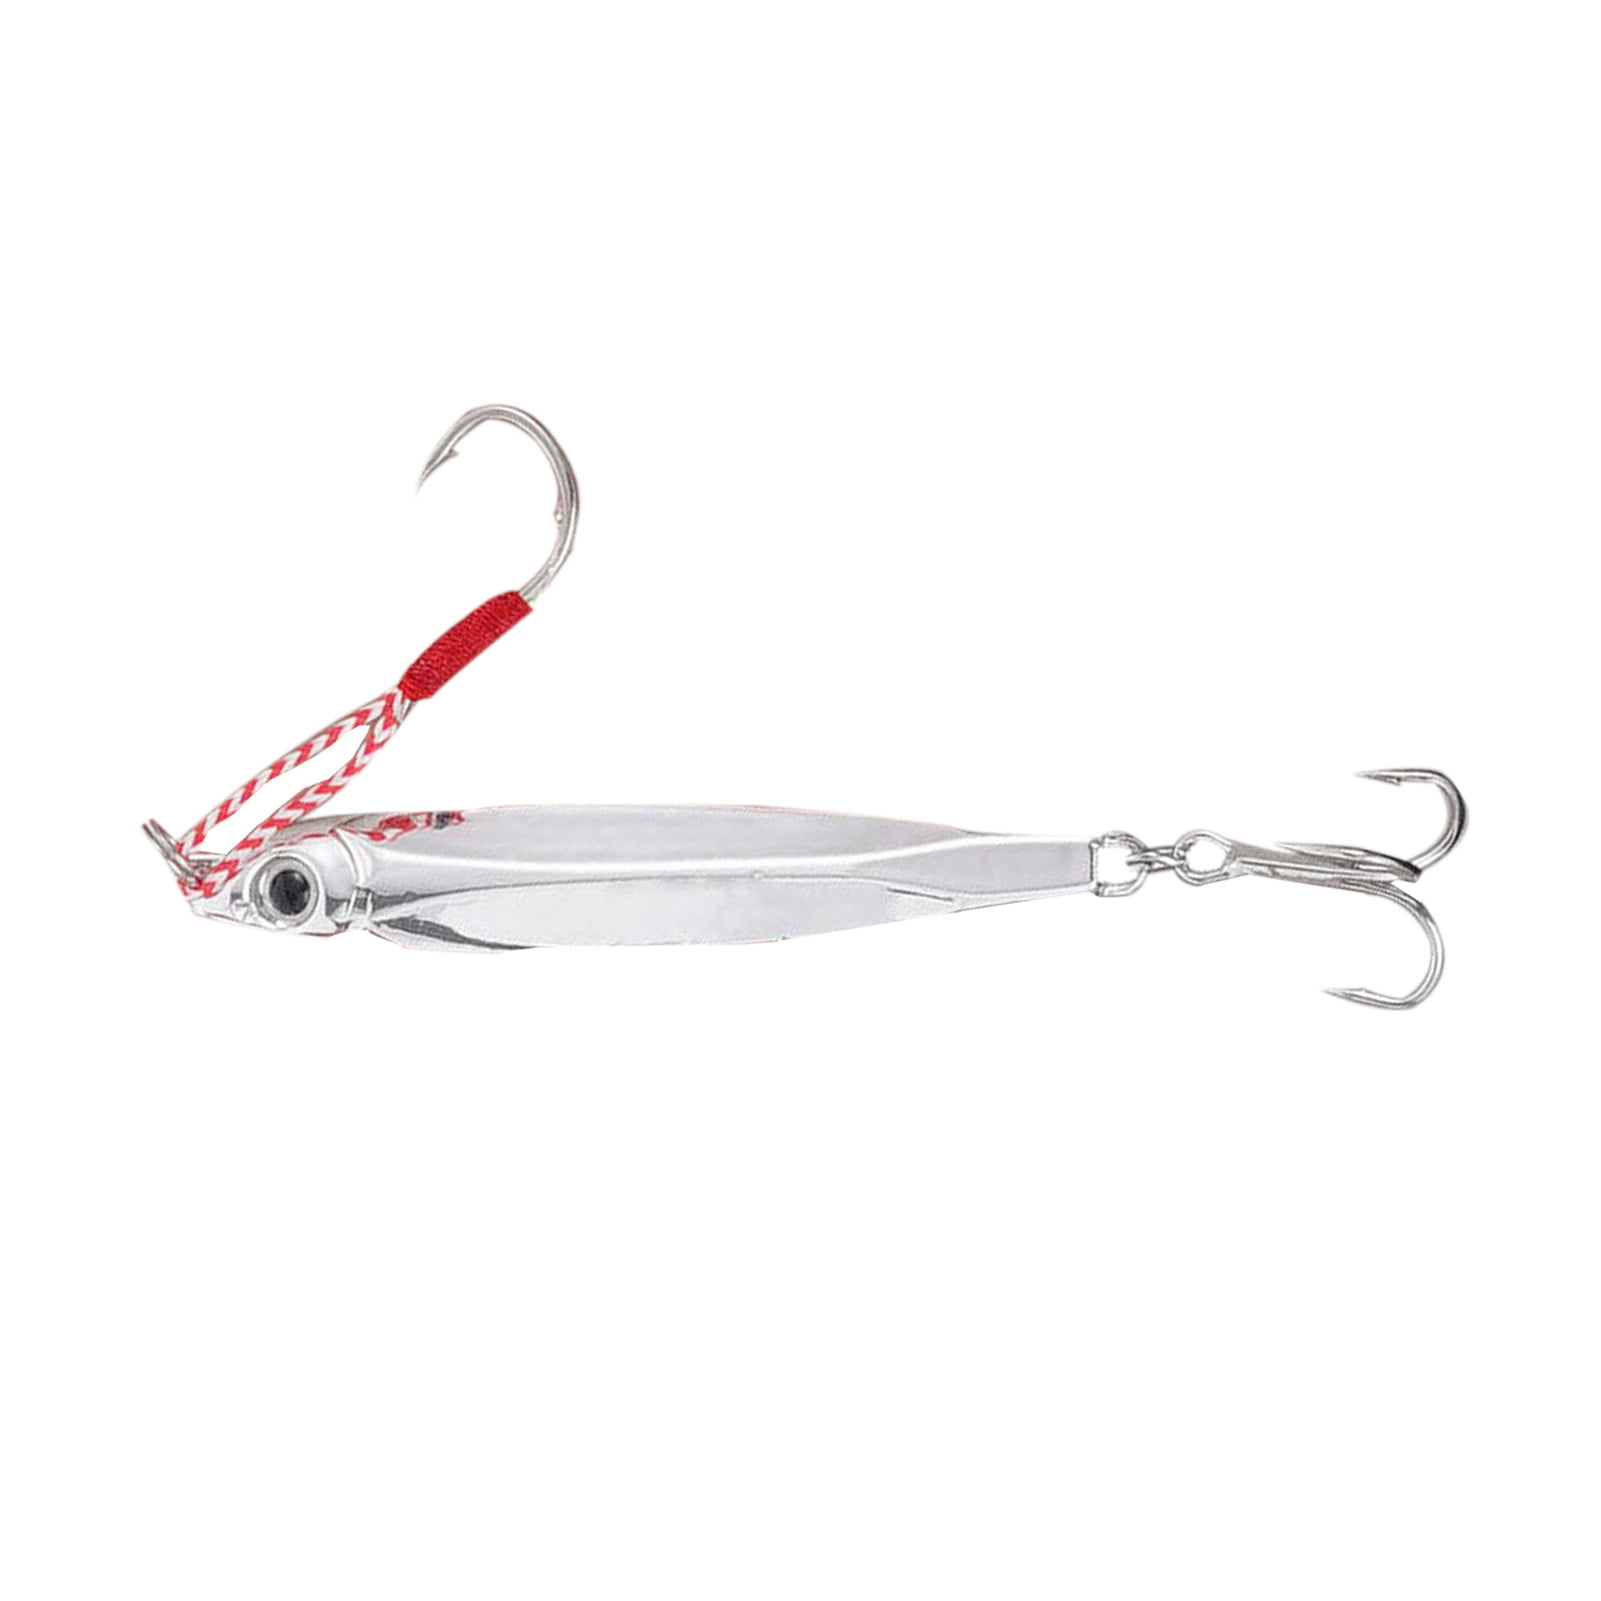 1 Pcs Metal Fishing Bait Metal Spinner Shine Lures with Hook Fishing Gear OD$T 